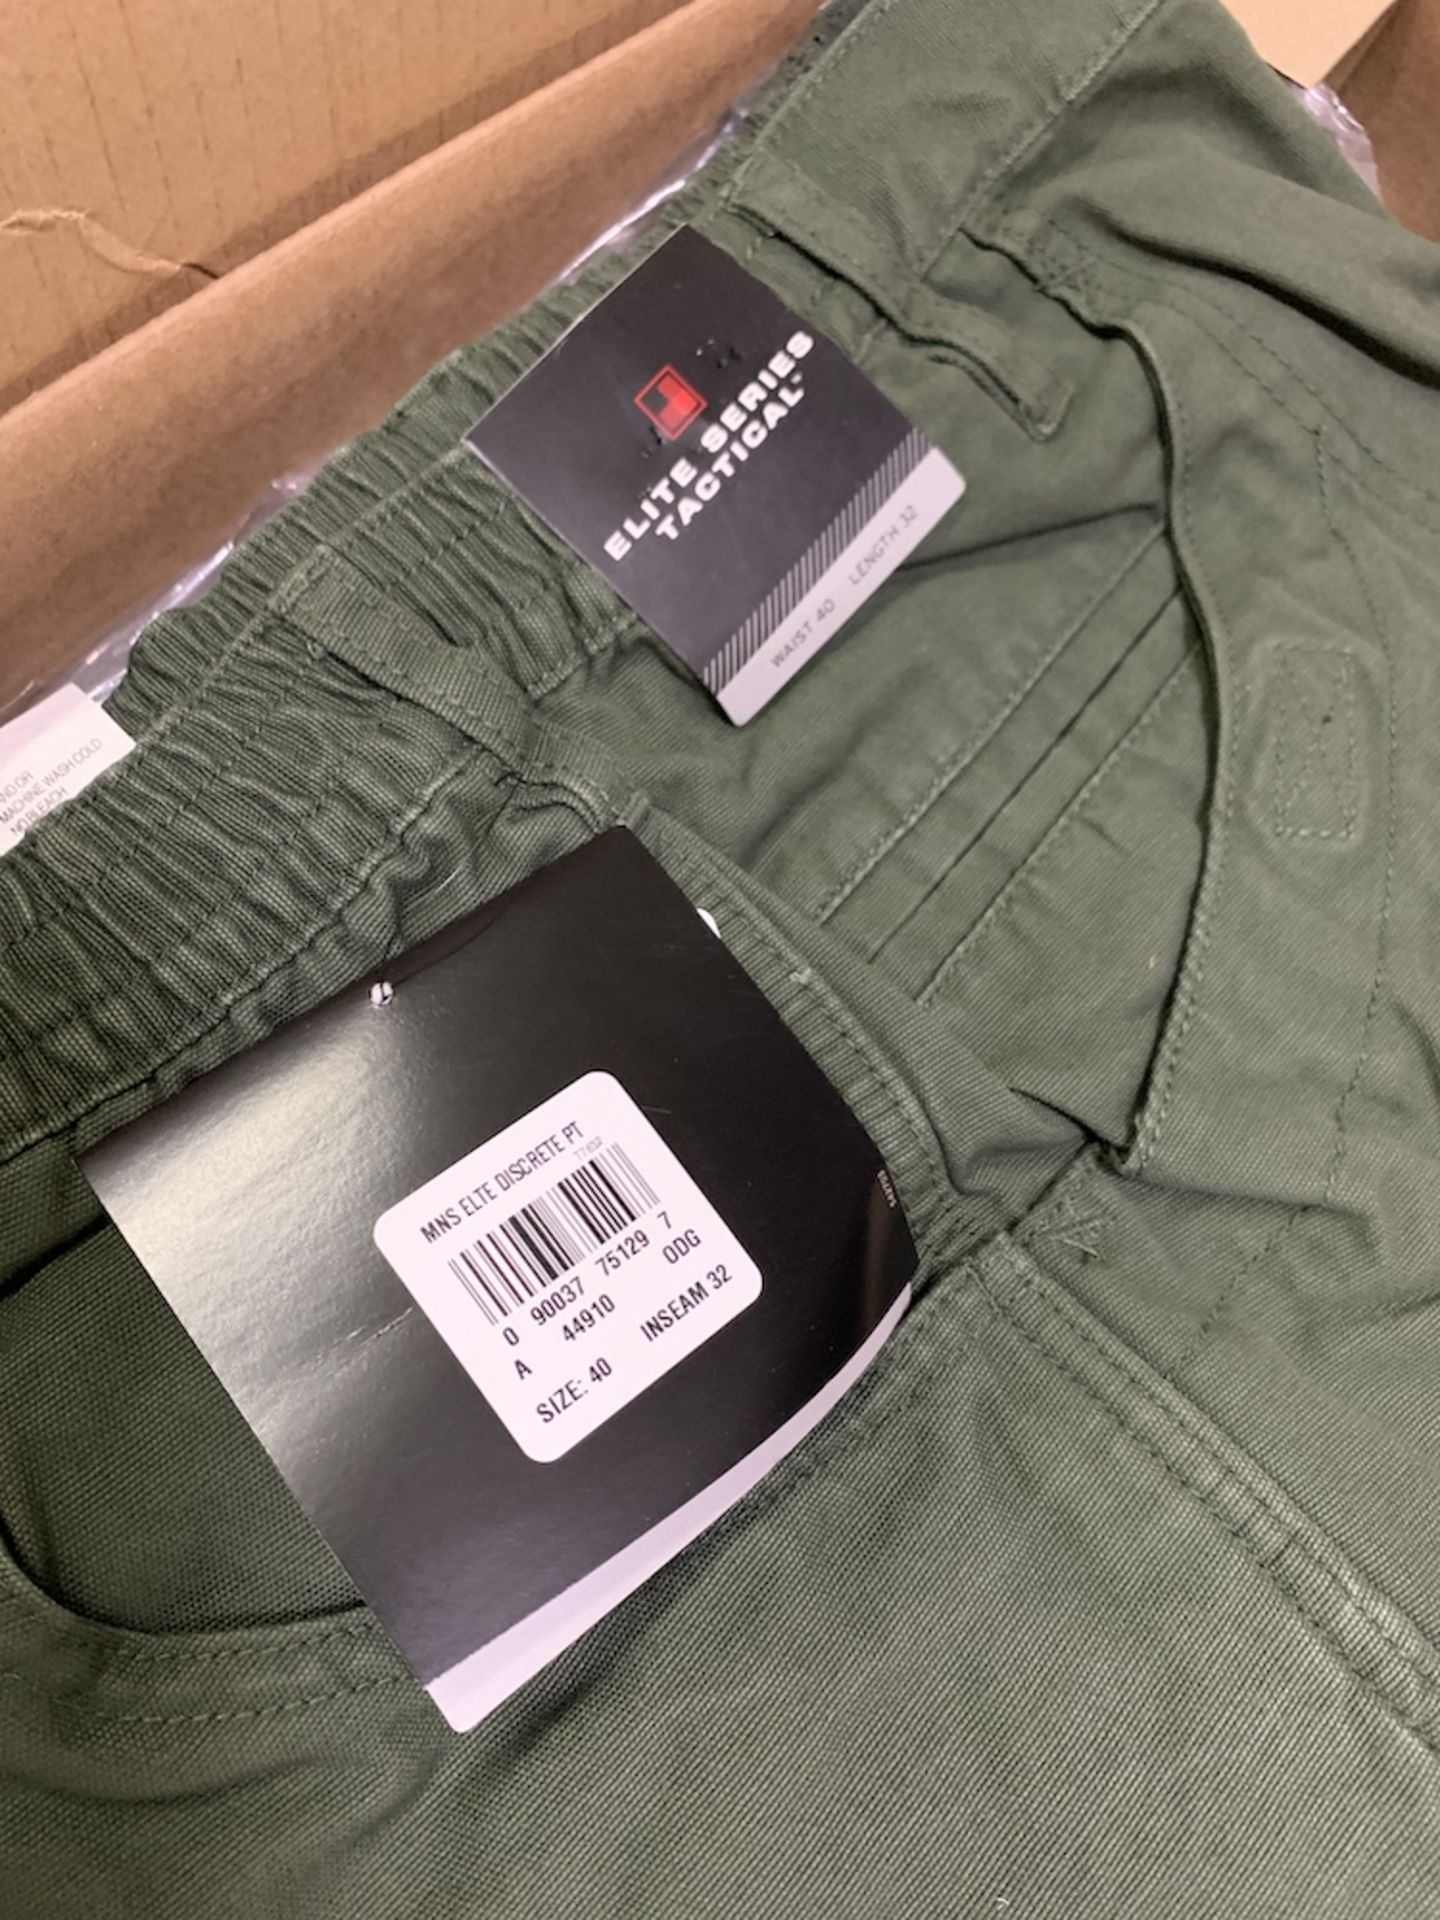 49 Pairs of Woolrich Elite Series Tactical Pants, Teflon, Dark Green, Various Sizes, Retail $1,225+ - Image 5 of 5